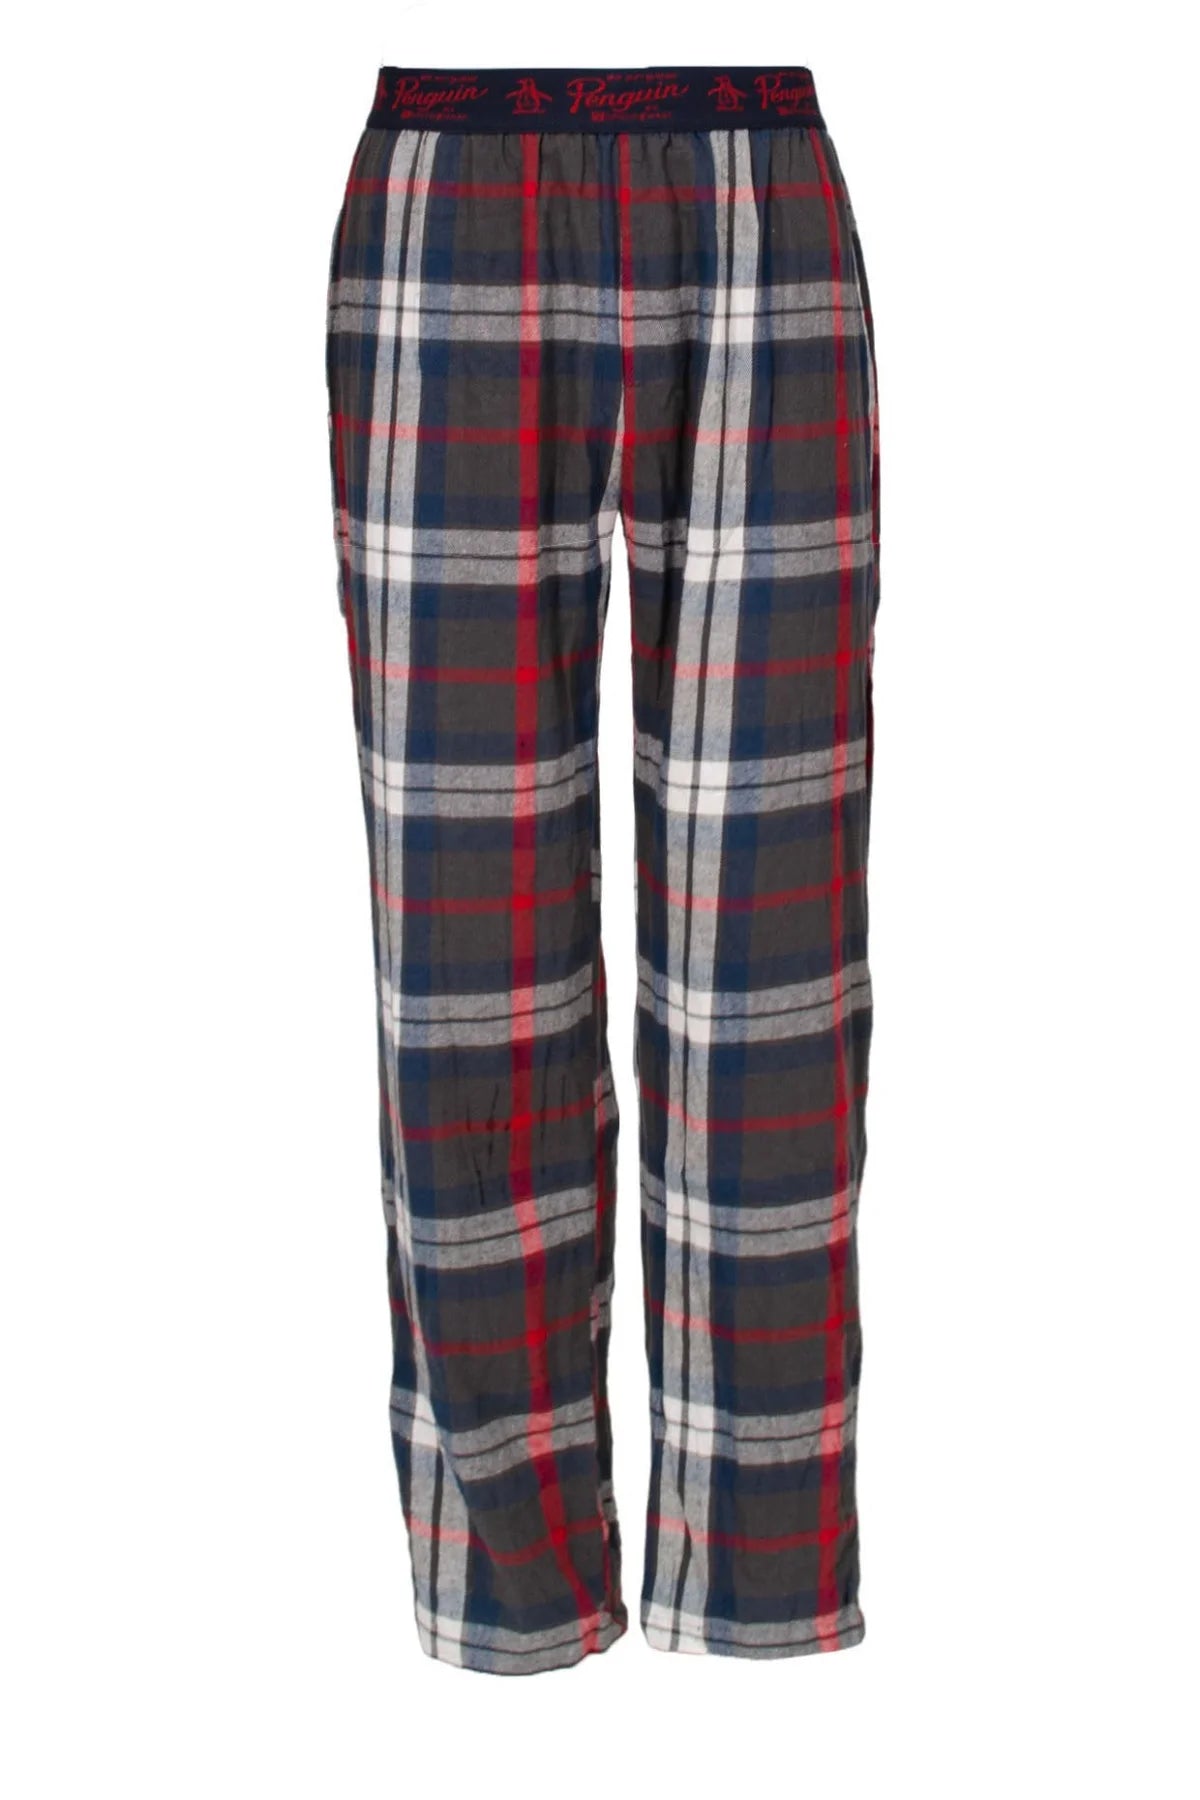 Penguin Cotton Check Pyjama Lounge Pants Grey/Red/Blue / S